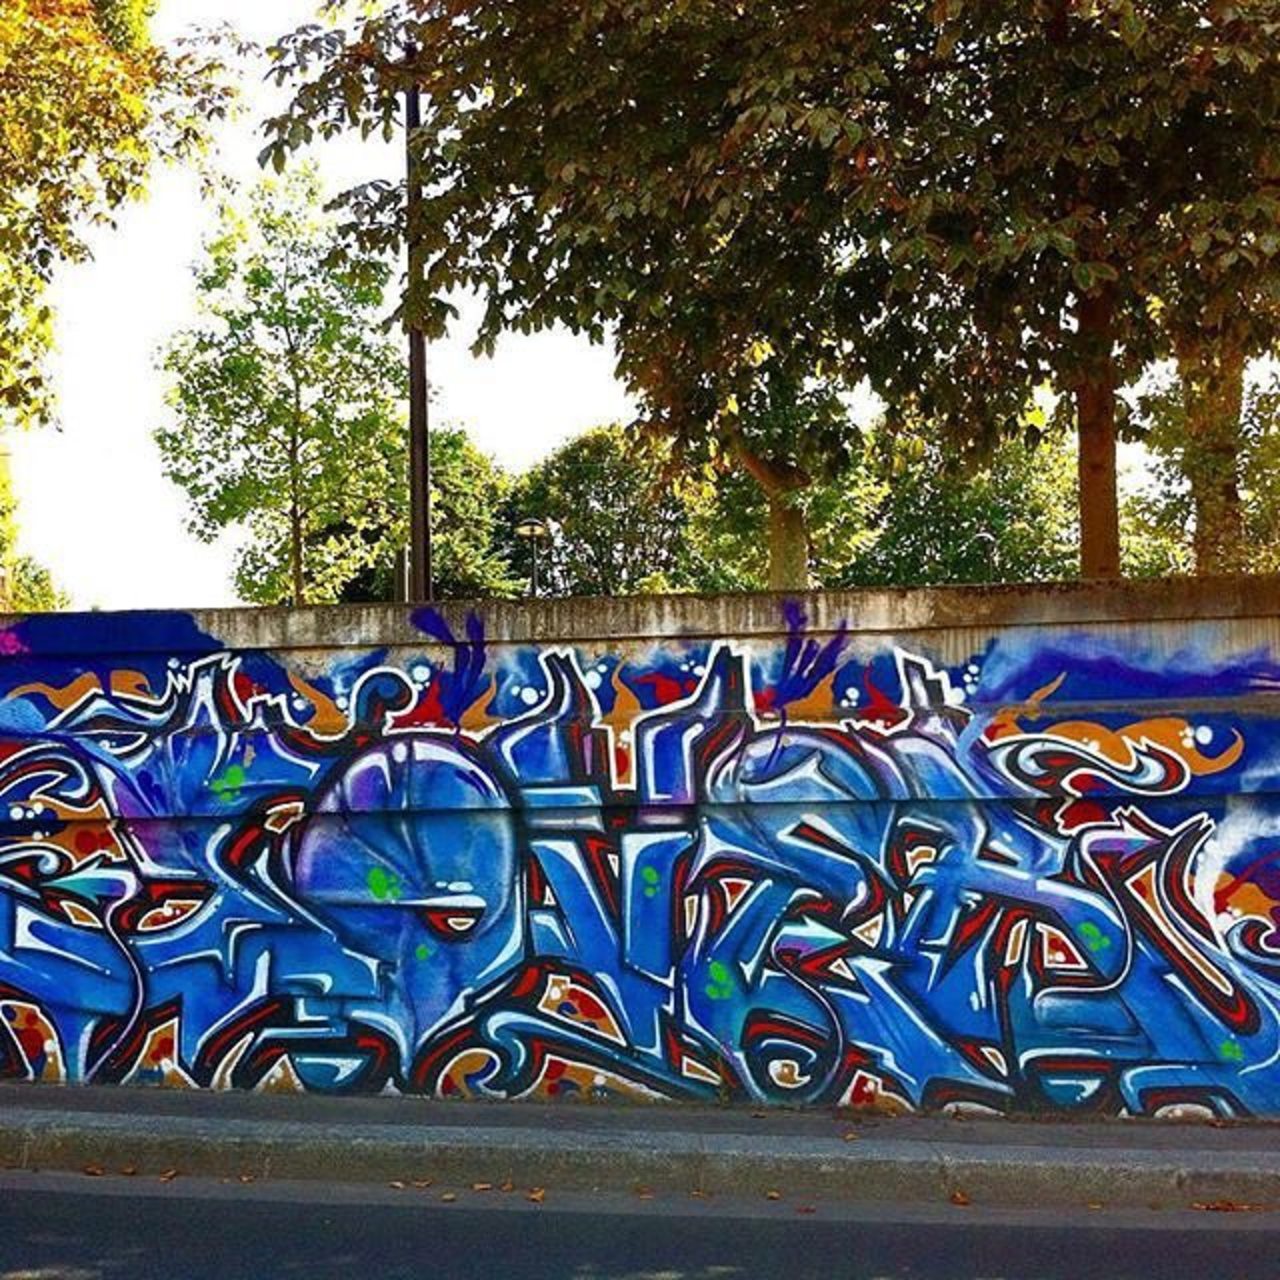 #streetart #streetarteverywhere #streetshot #graffitiart #graffiti #arturbain #urbanart  #mur #mural #wall #wallart… https://t.co/yUiJGvIJlo